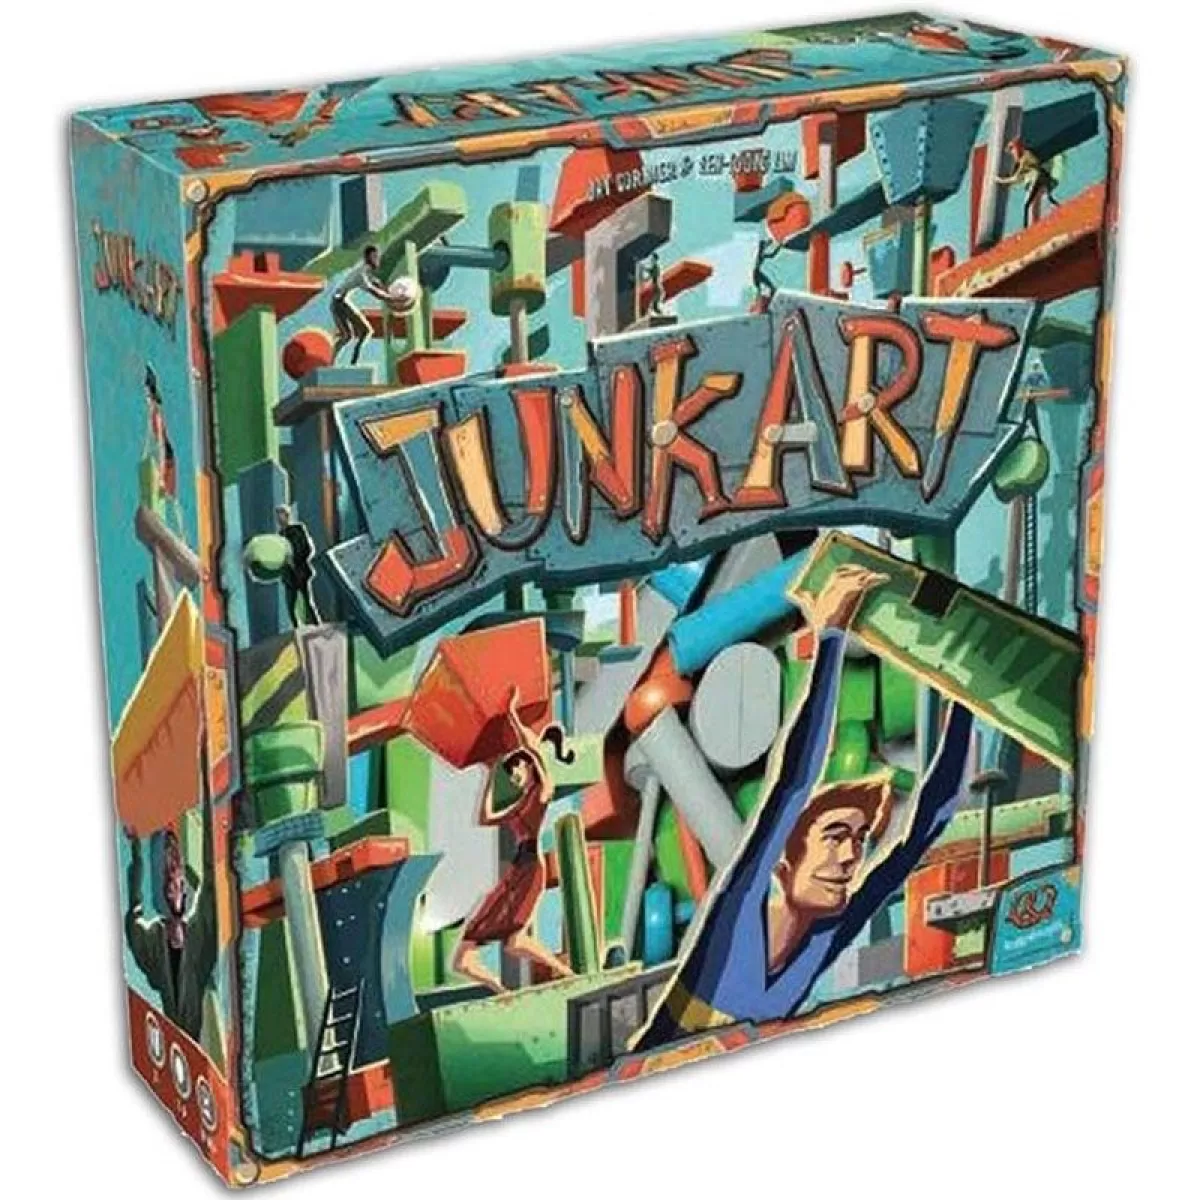 Junk art (plastic version)